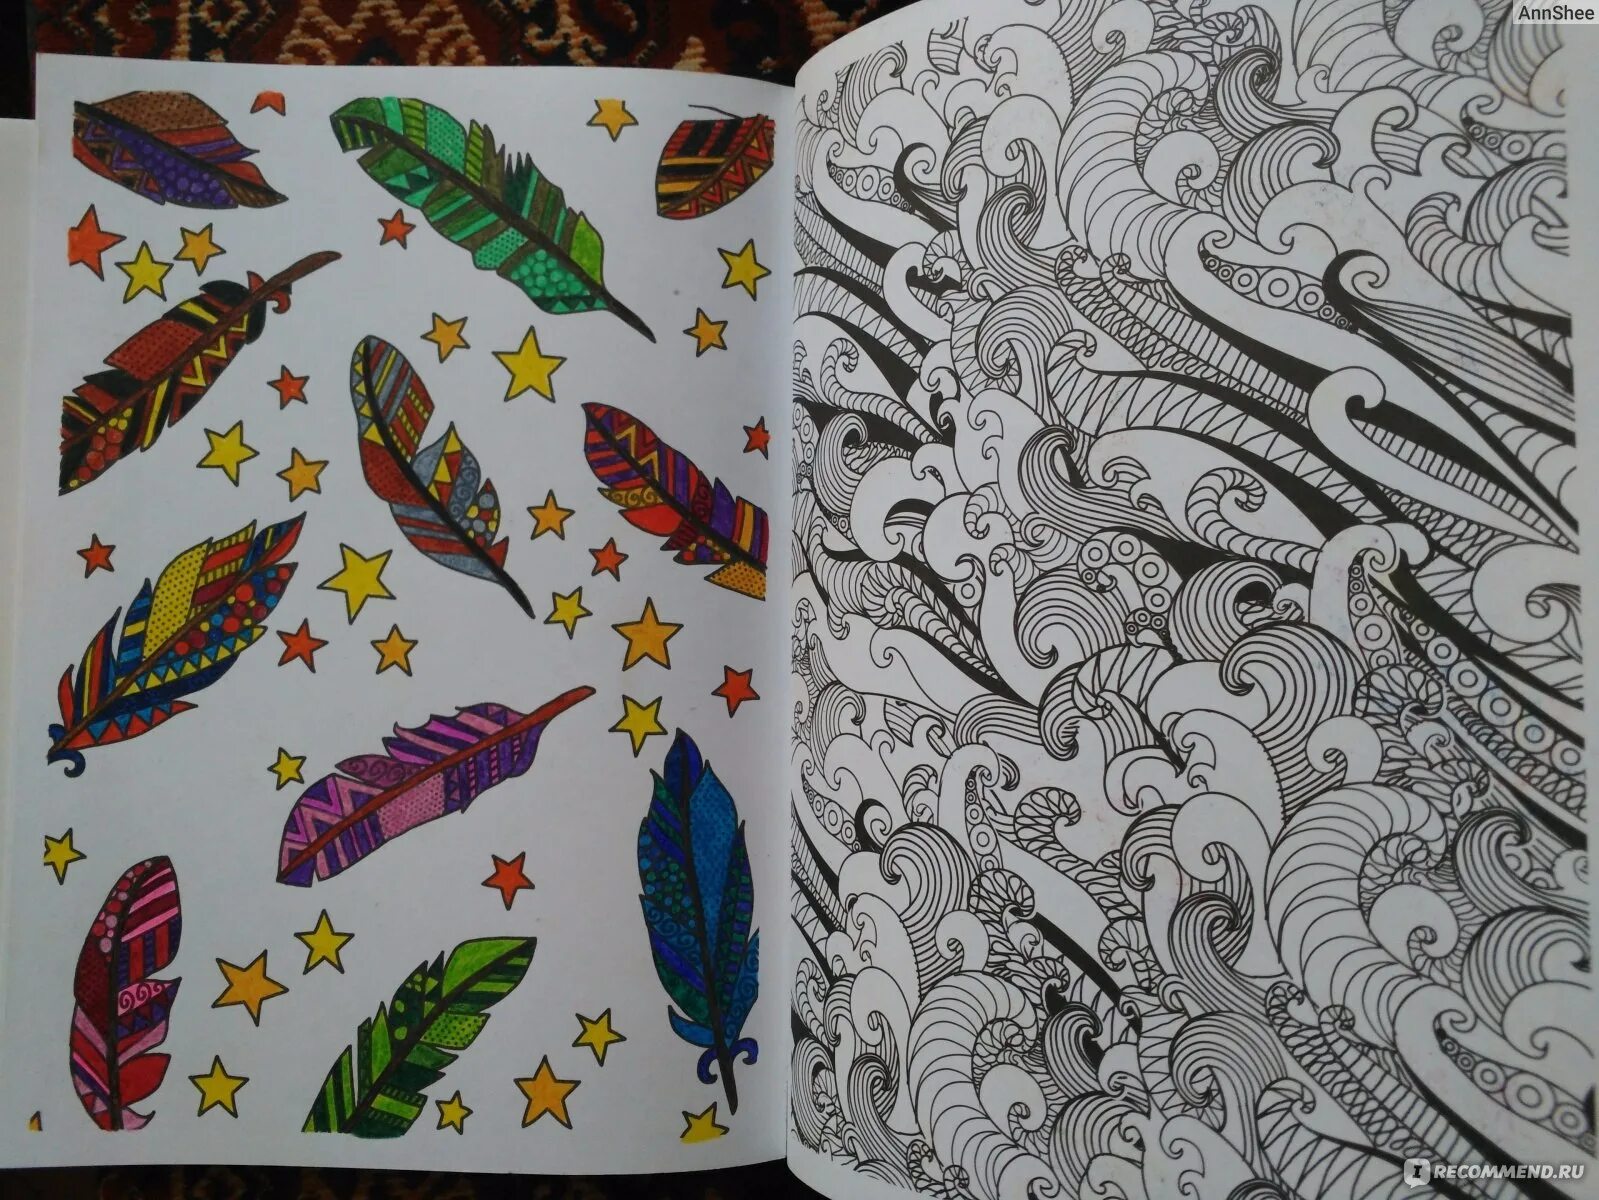 Harmonious coming dream coloring book